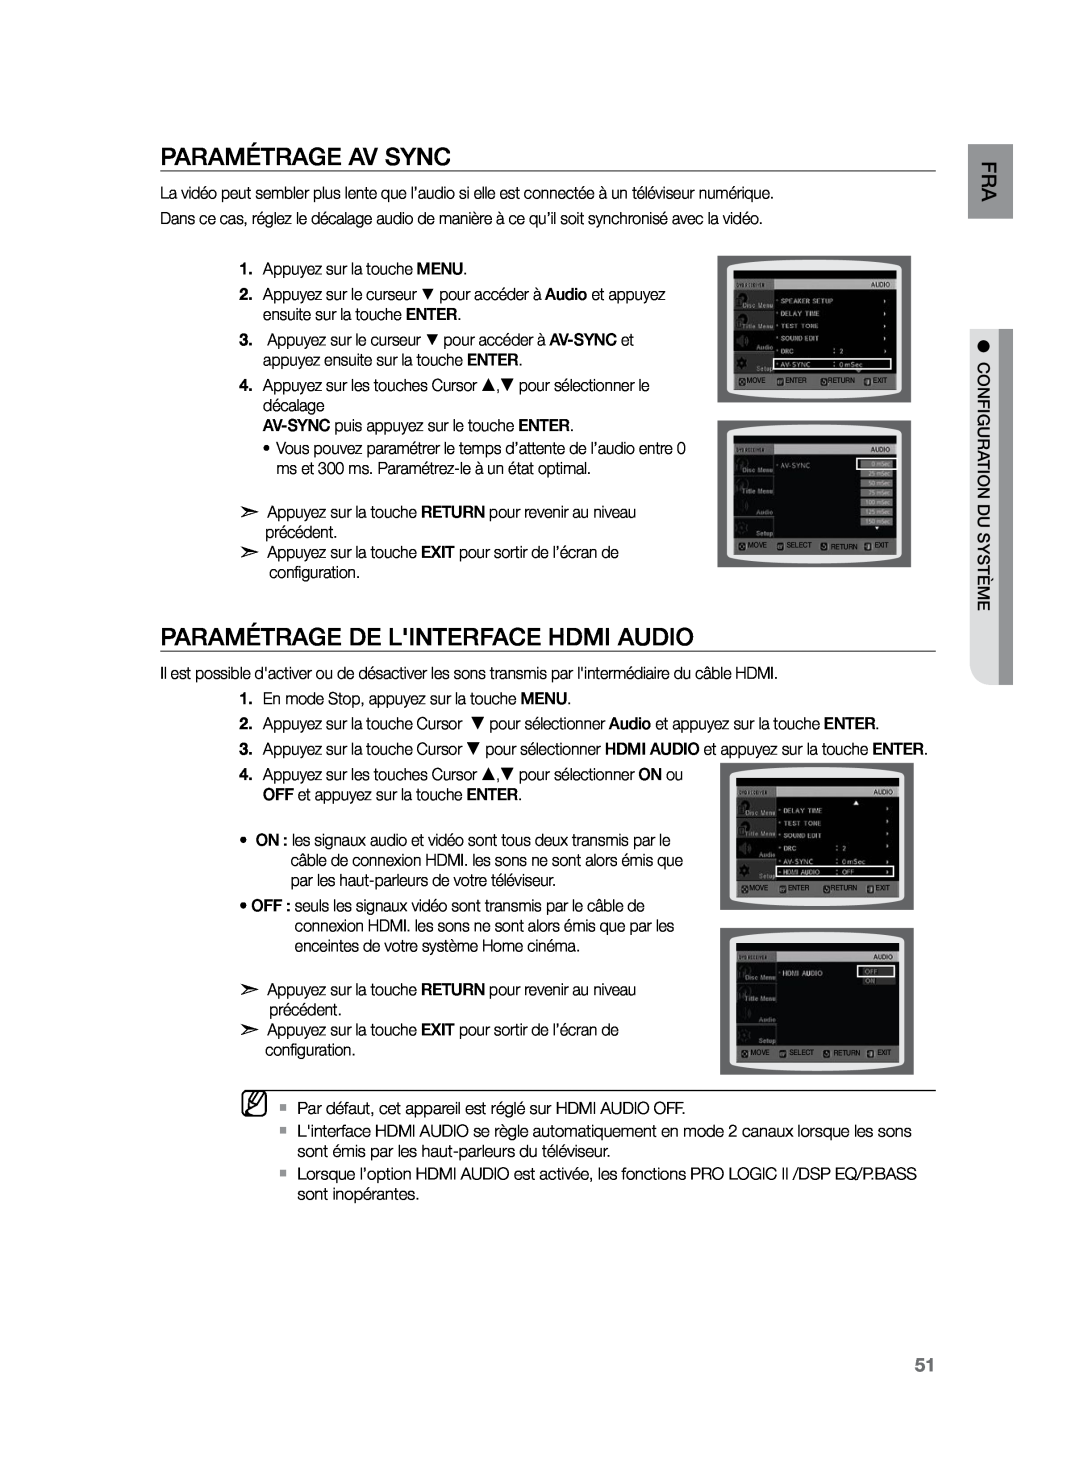 Samsung HT-Z220R/XEF, HT-TZ225R/XEF, HT-TZ222R/XEF manual Paramétrage AV SYNC, Paramétrage de linterface HDMI audio 